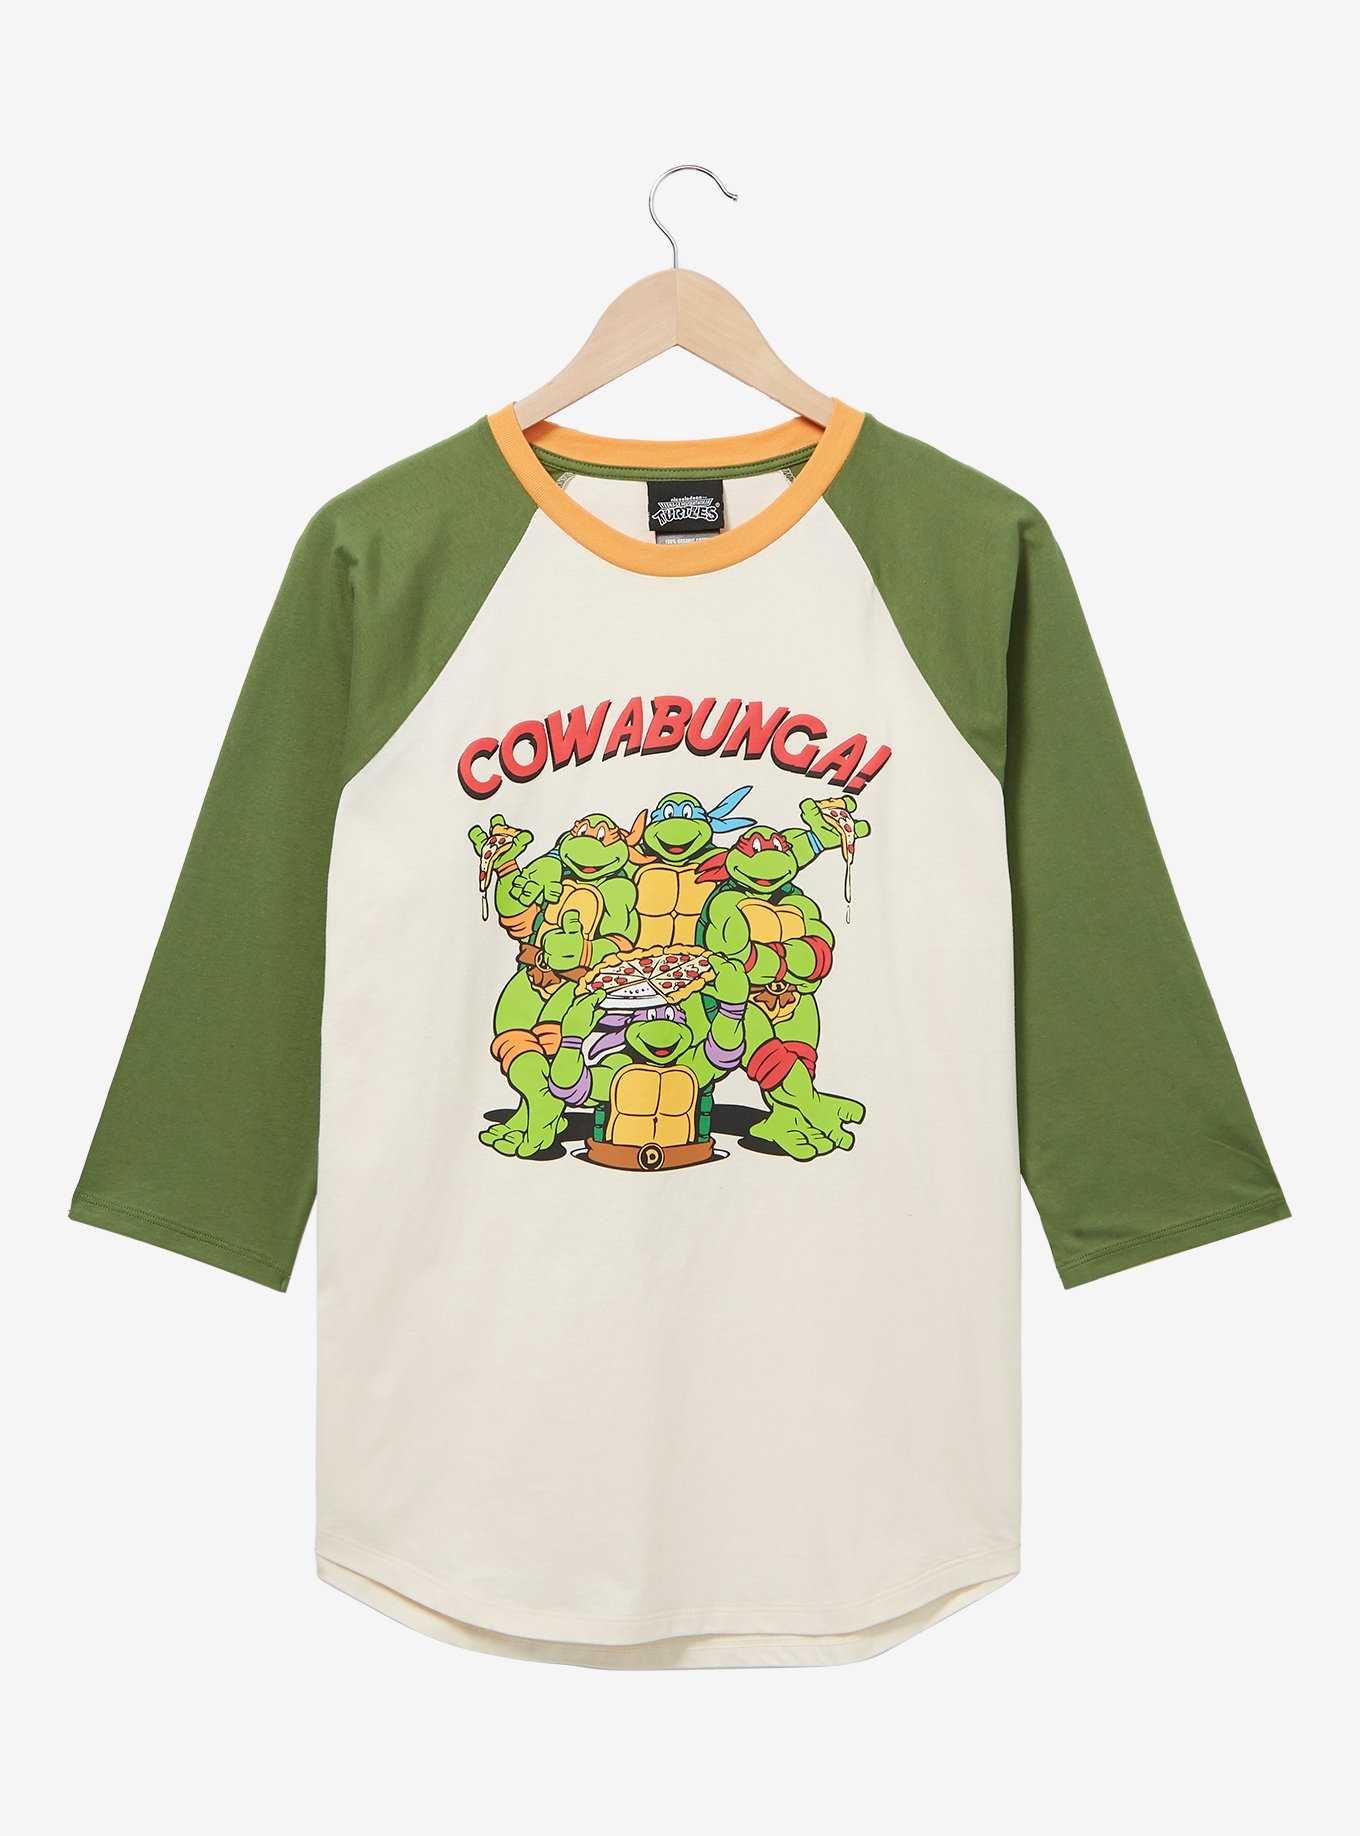 Teenage Mutant Ninja Turtles Group Kids T-Shirt - Shirtstore